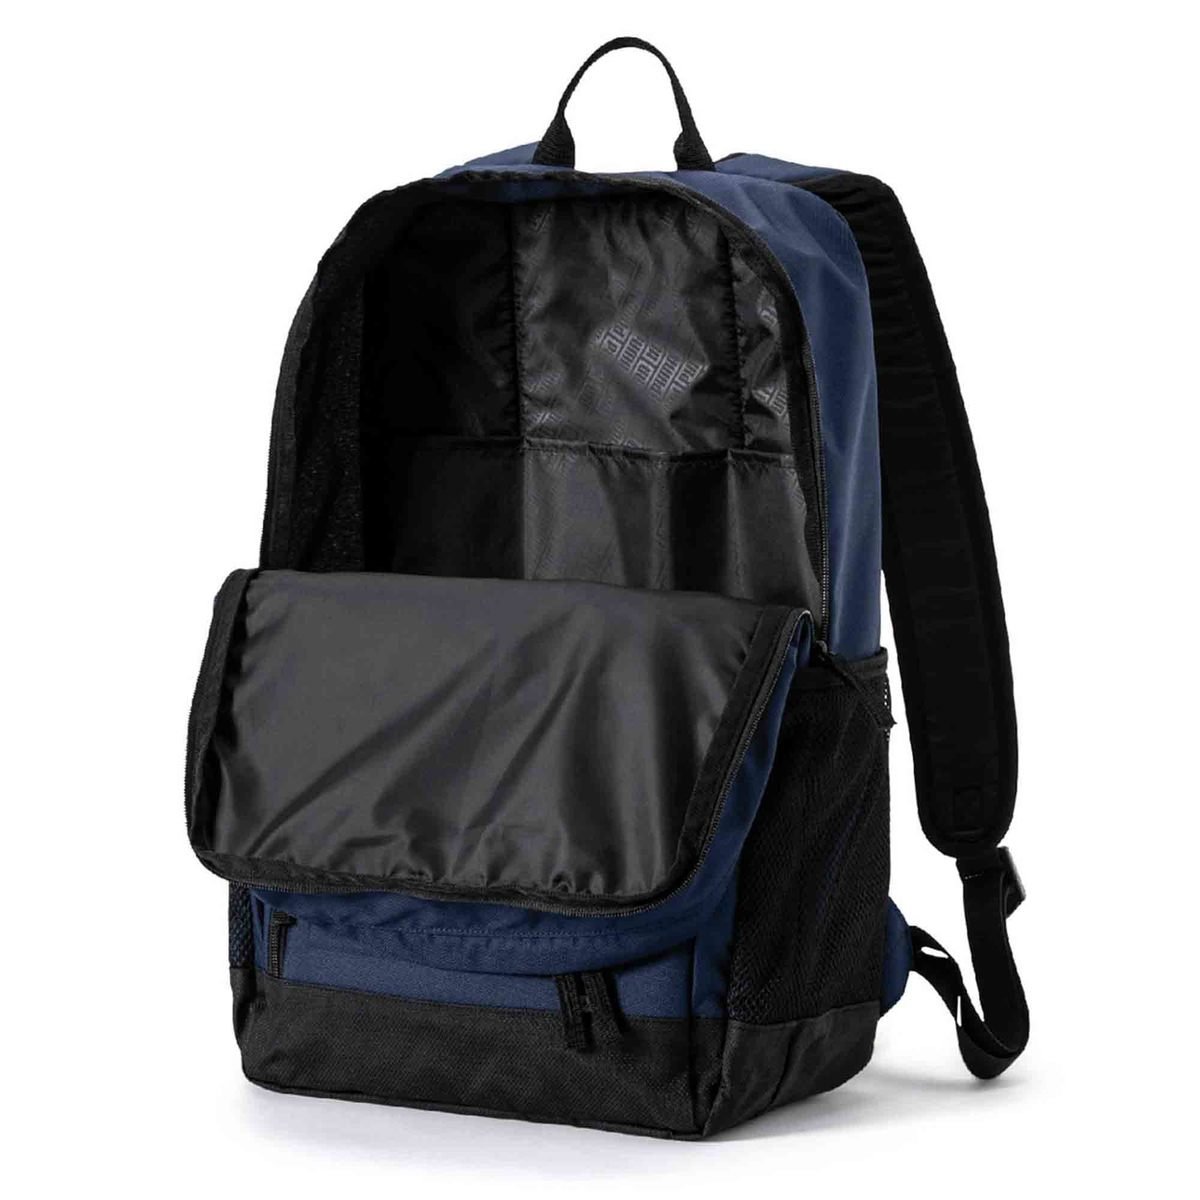 PUMA S Backpack Navy 07558102